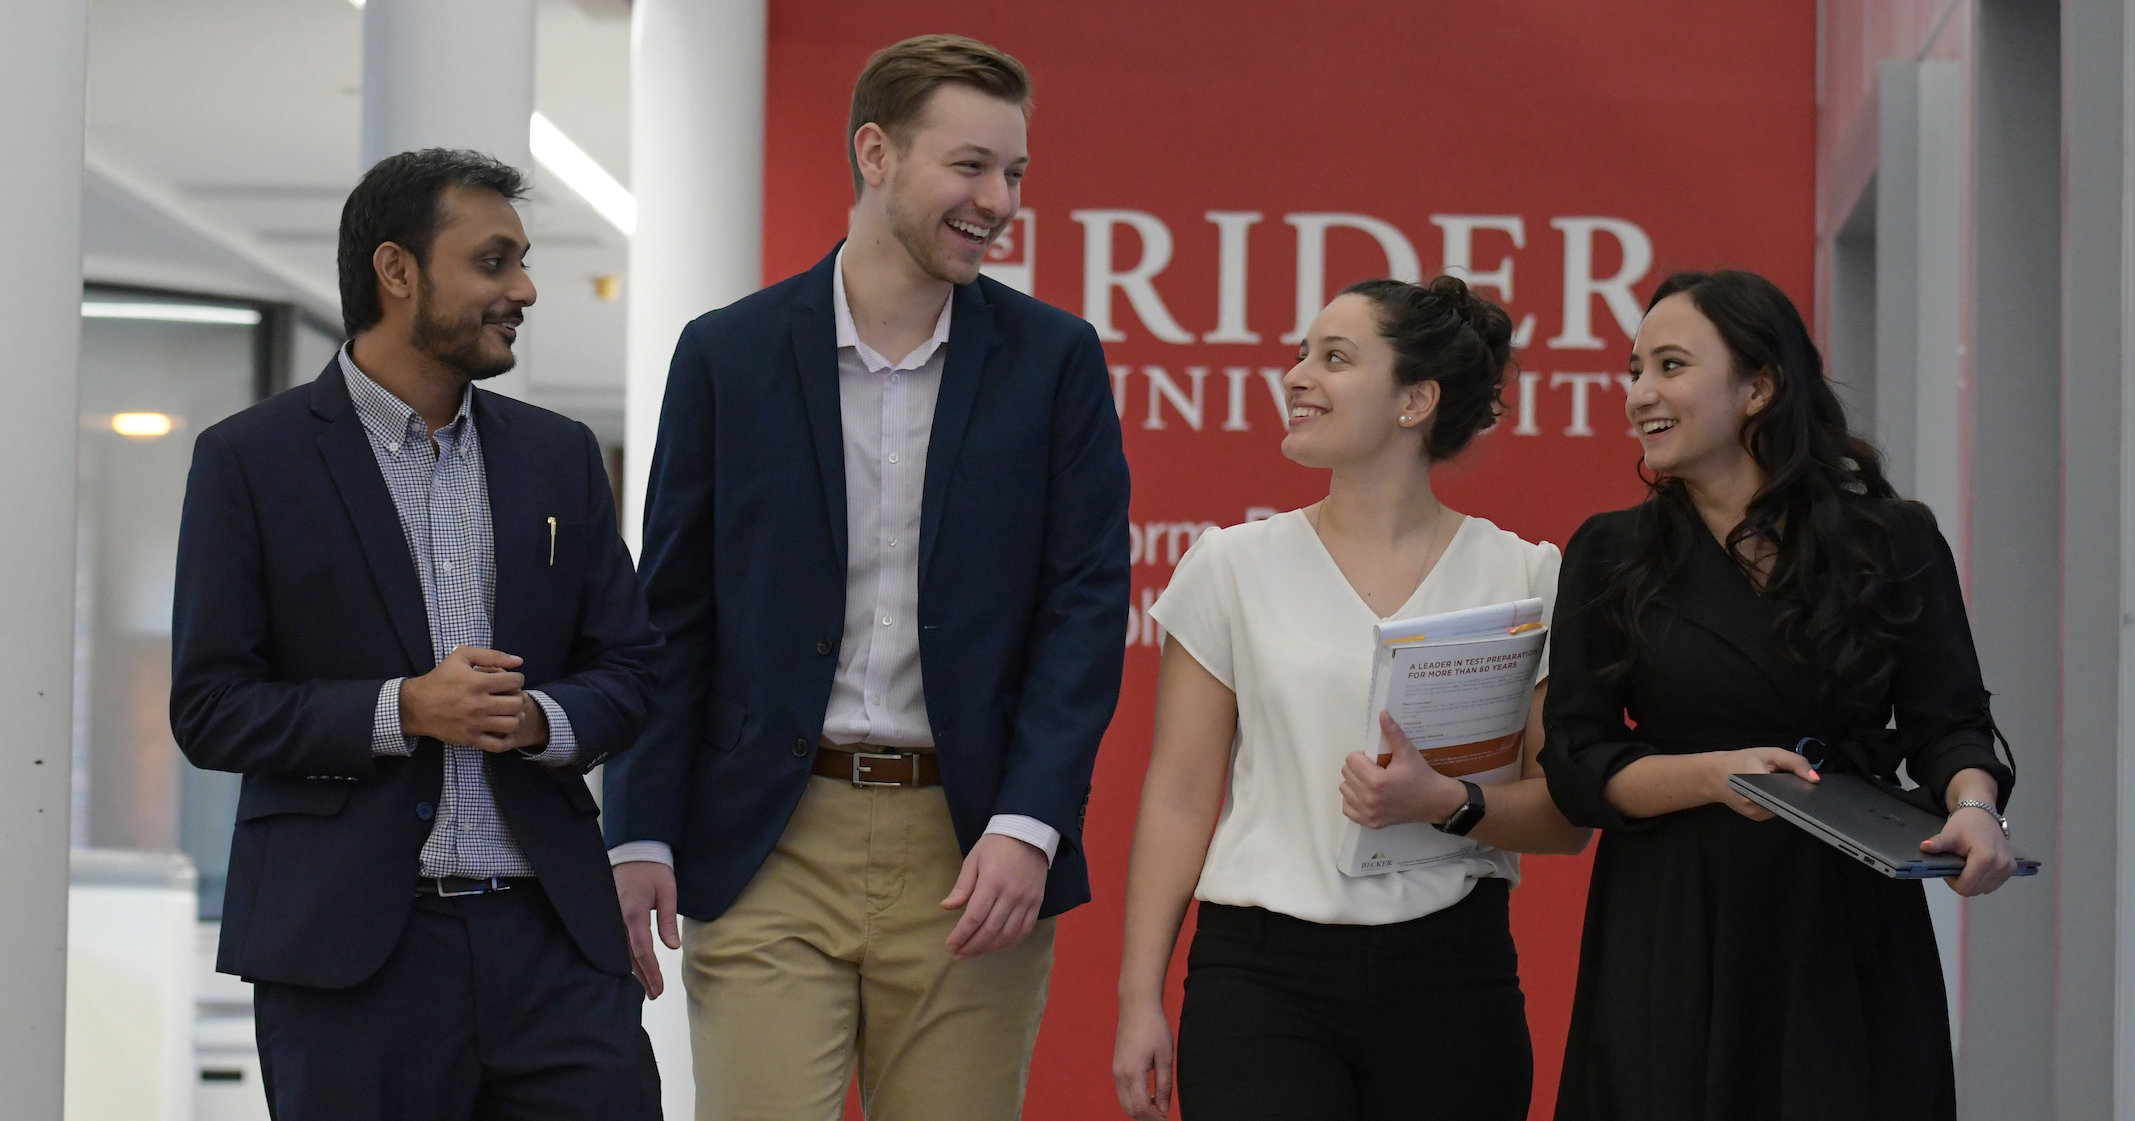 Rider students achieve success after graduation